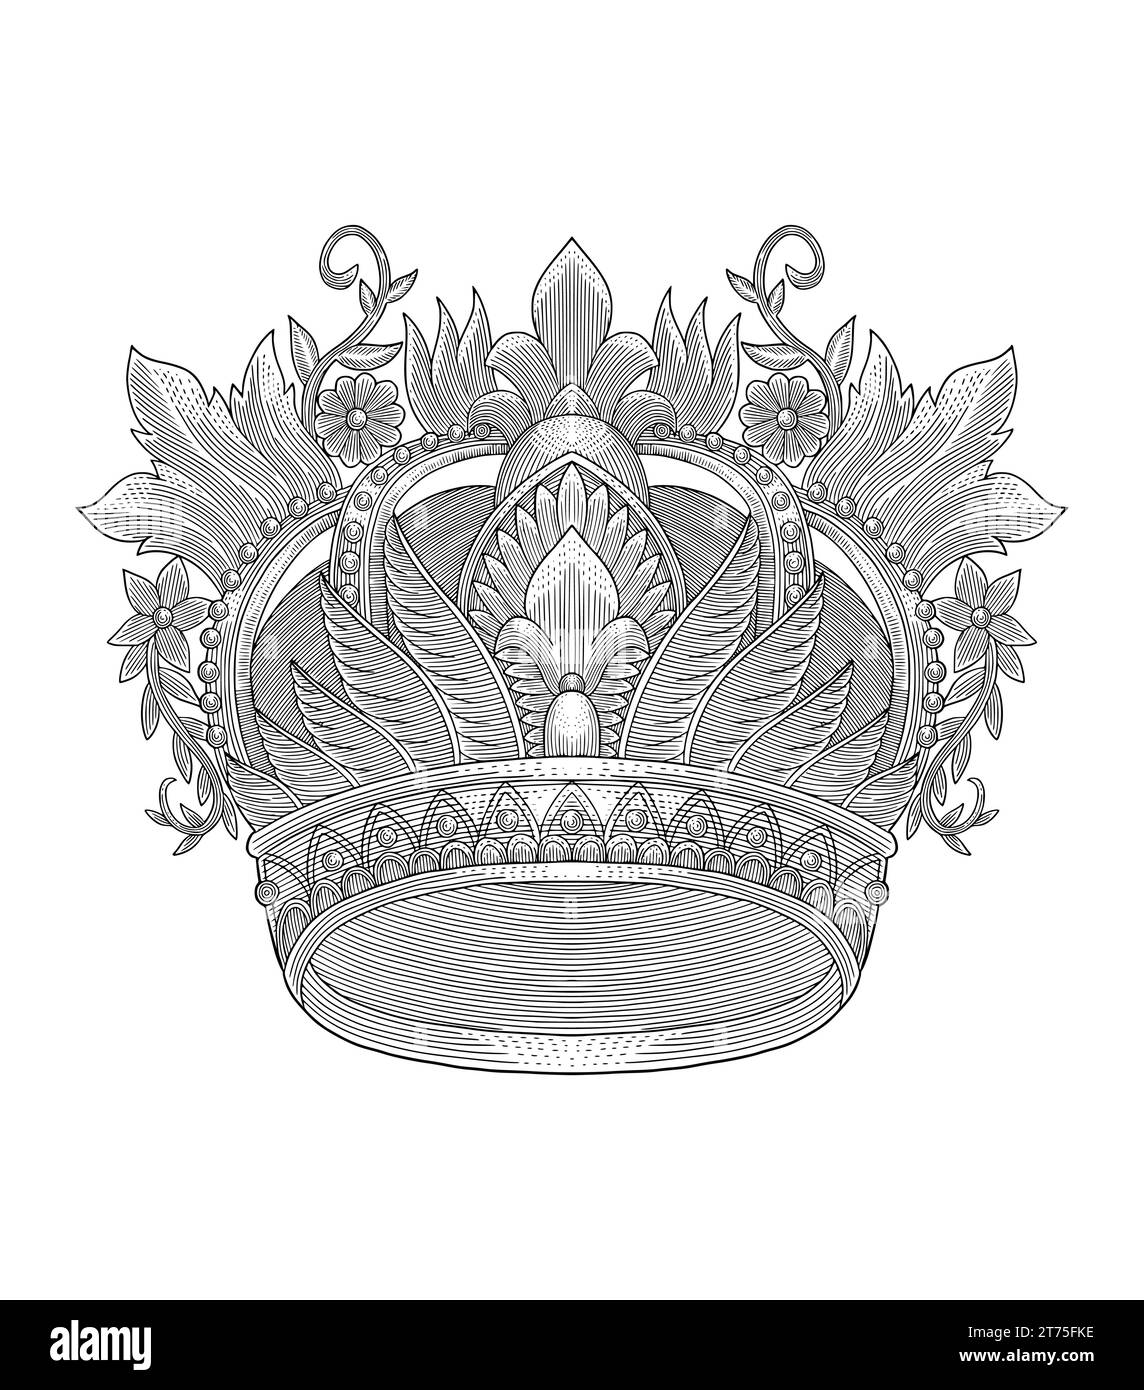 Krone mit floralem Ornament, Illustration im Vintage-Gravurstil Stock Vektor